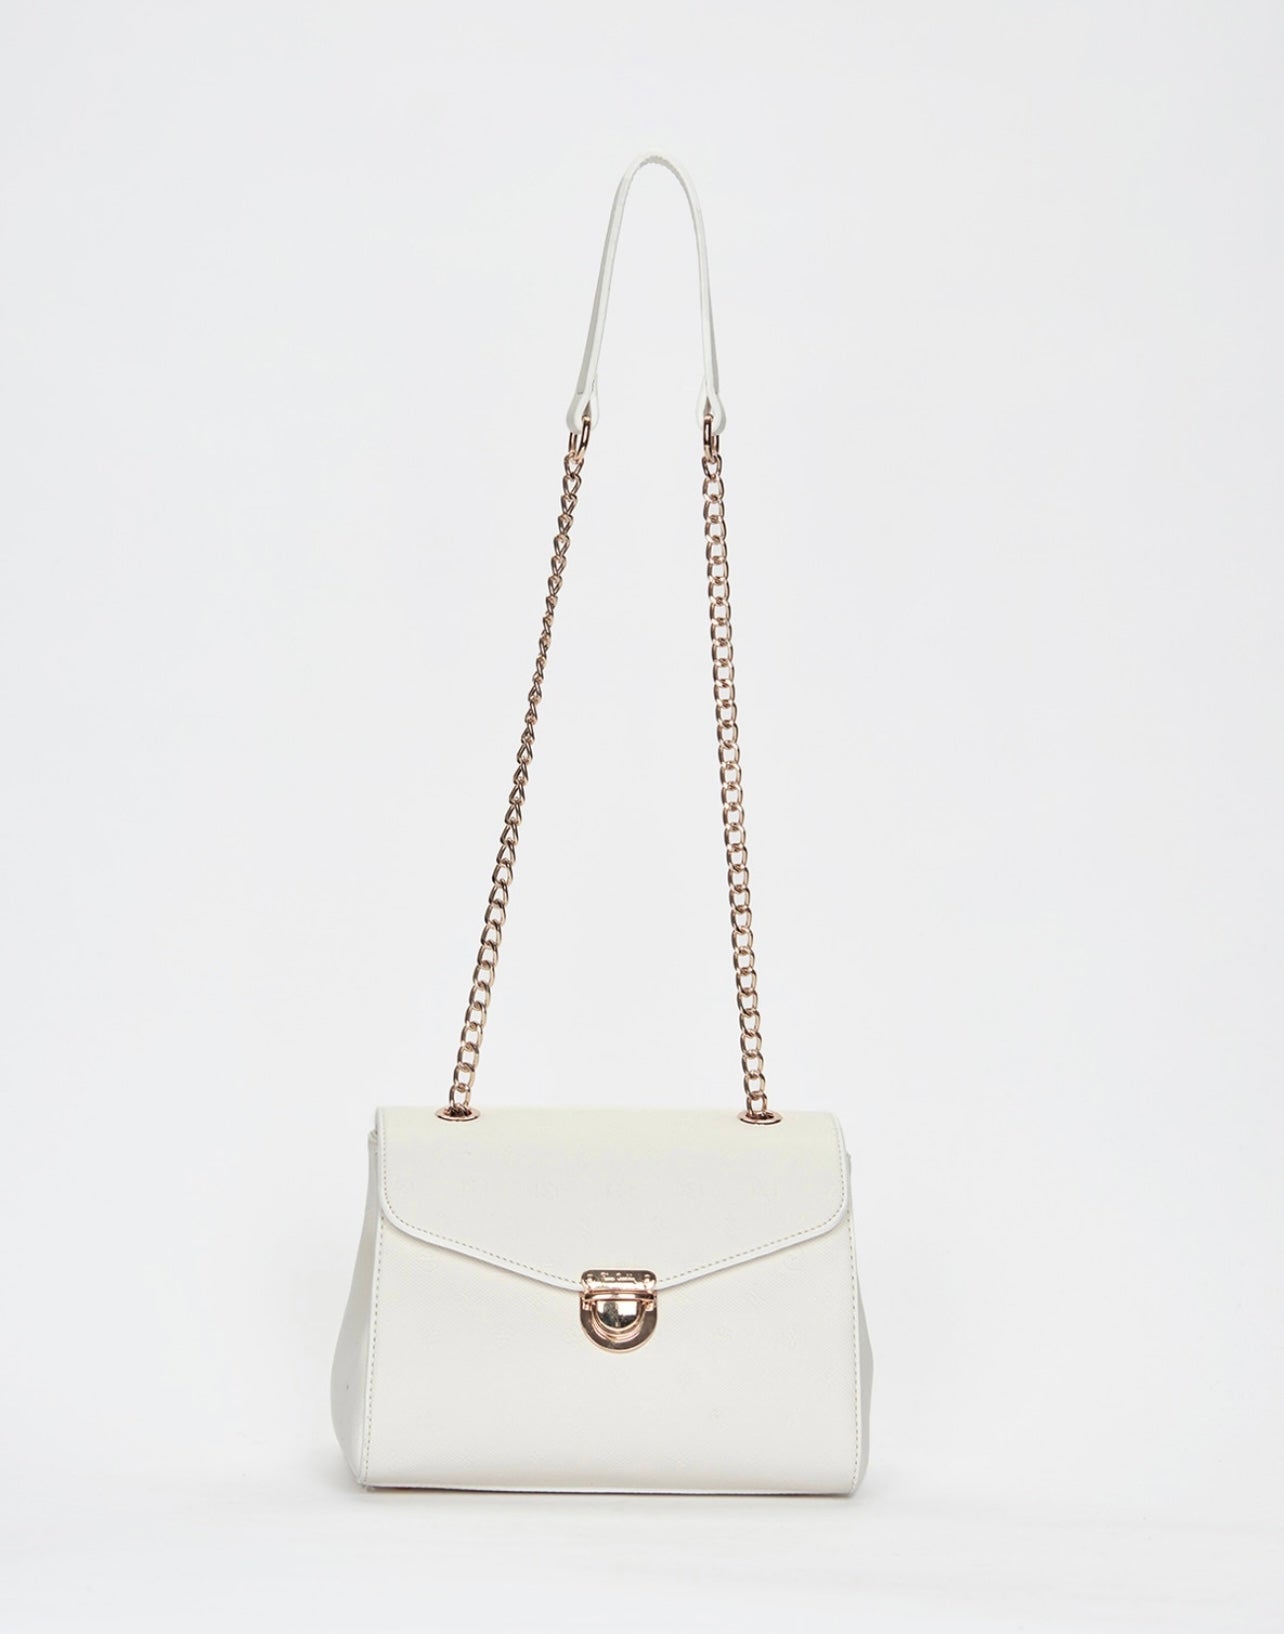 Pierre Cardin white bag